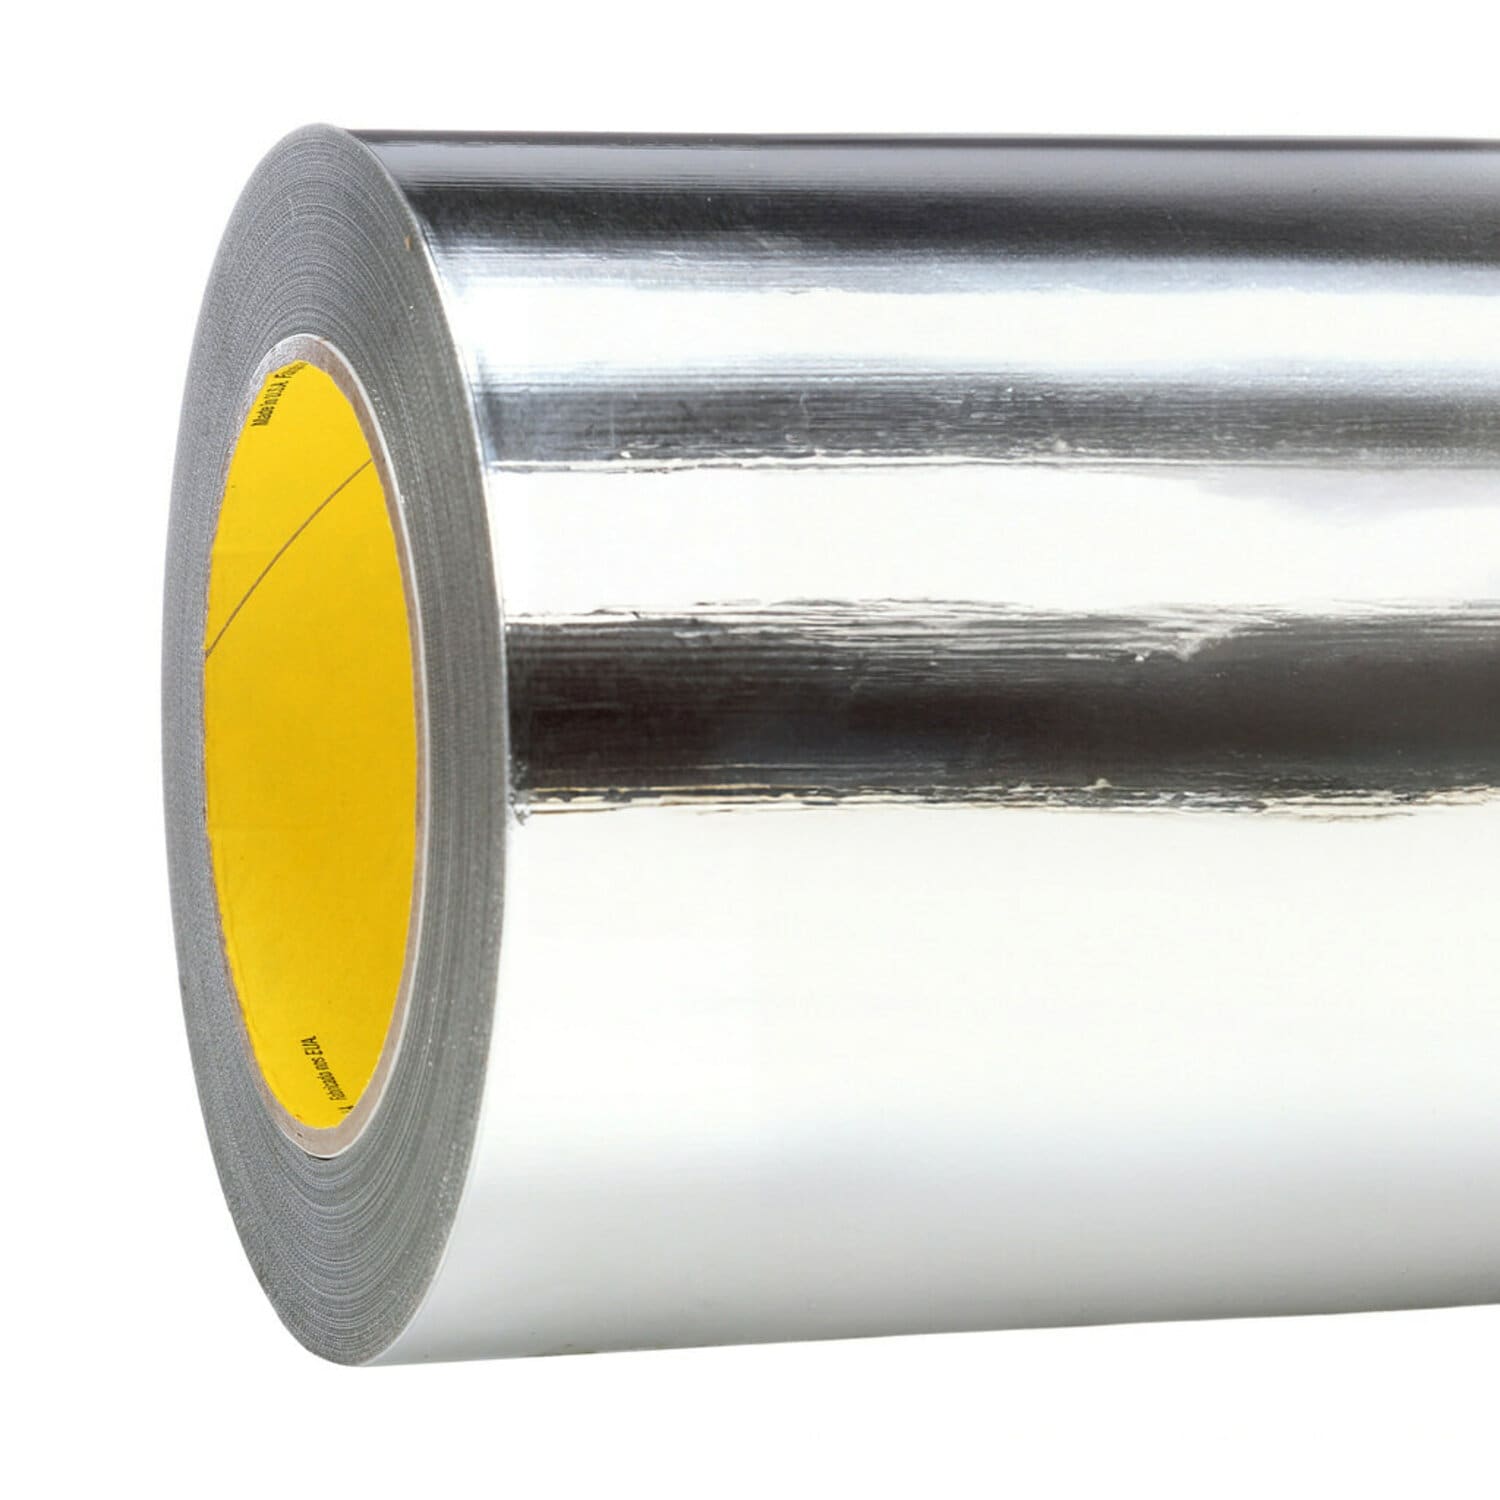 https://www.e-aircraftsupply.com/ItemImages/36/2360749E_a-roll-of-3m-aluminum-foil-tape-light-silver.jpg